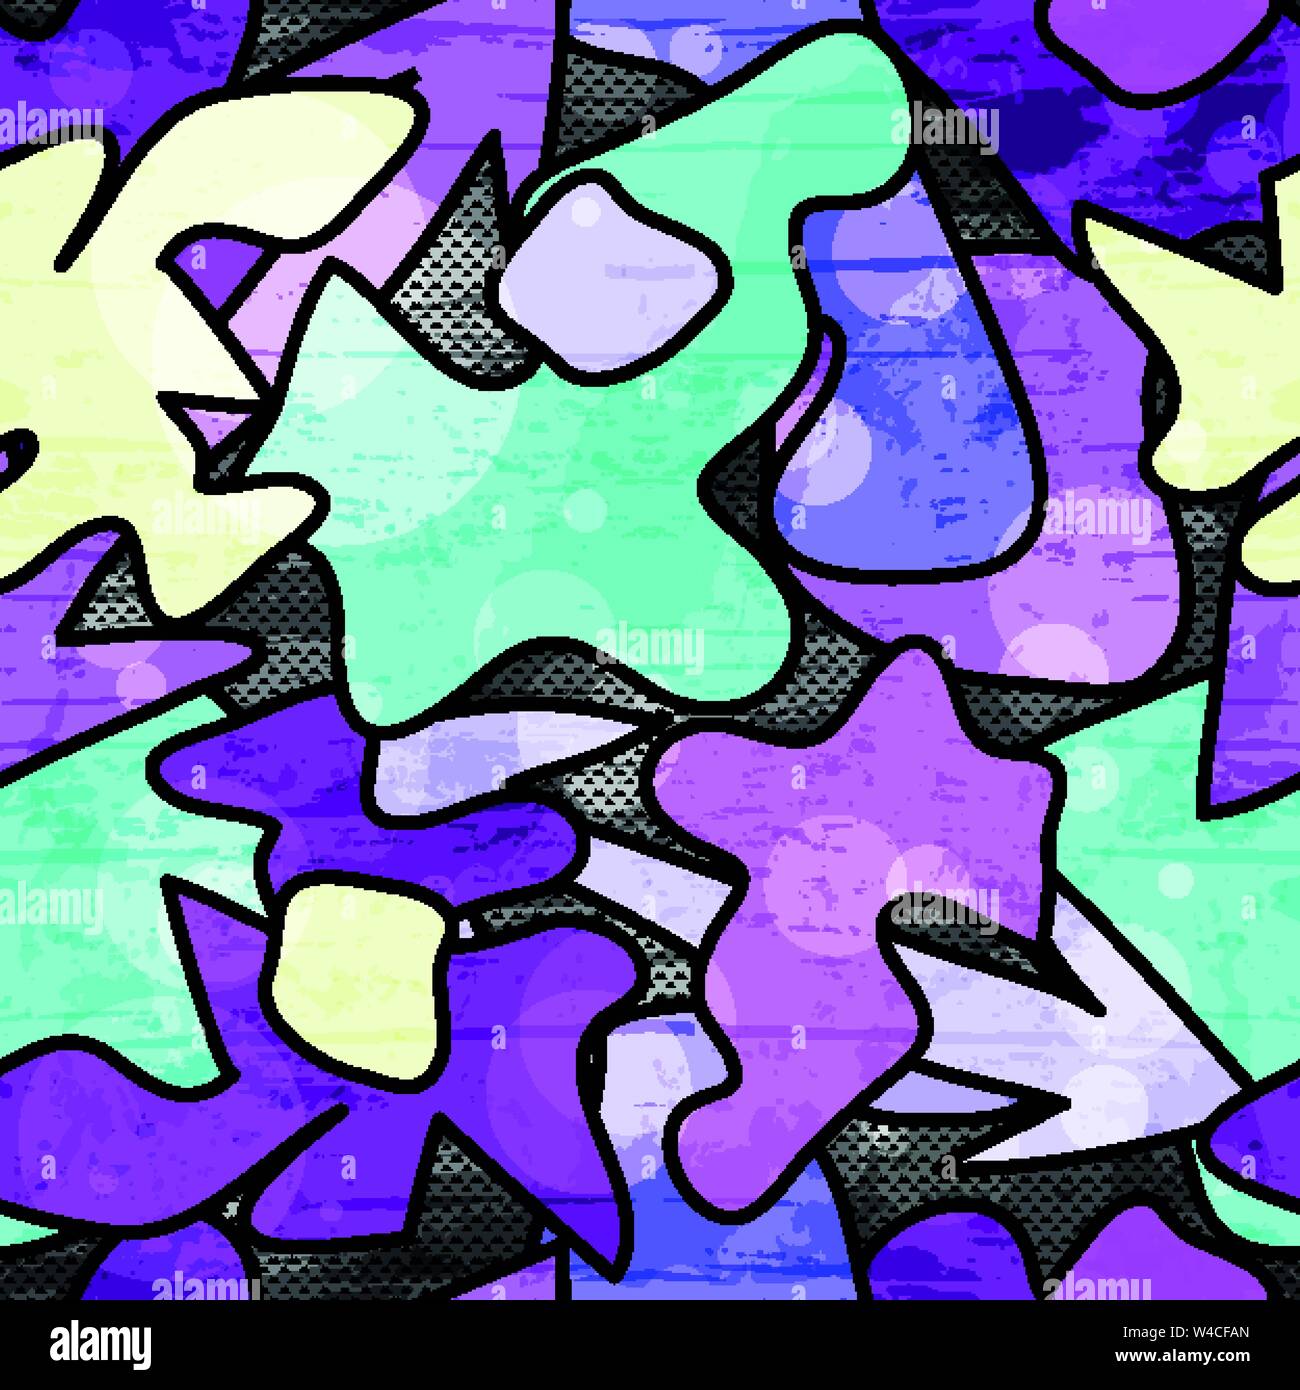 Graffiti Background Seamless texture vector royalty free stock illustration Stock Vector